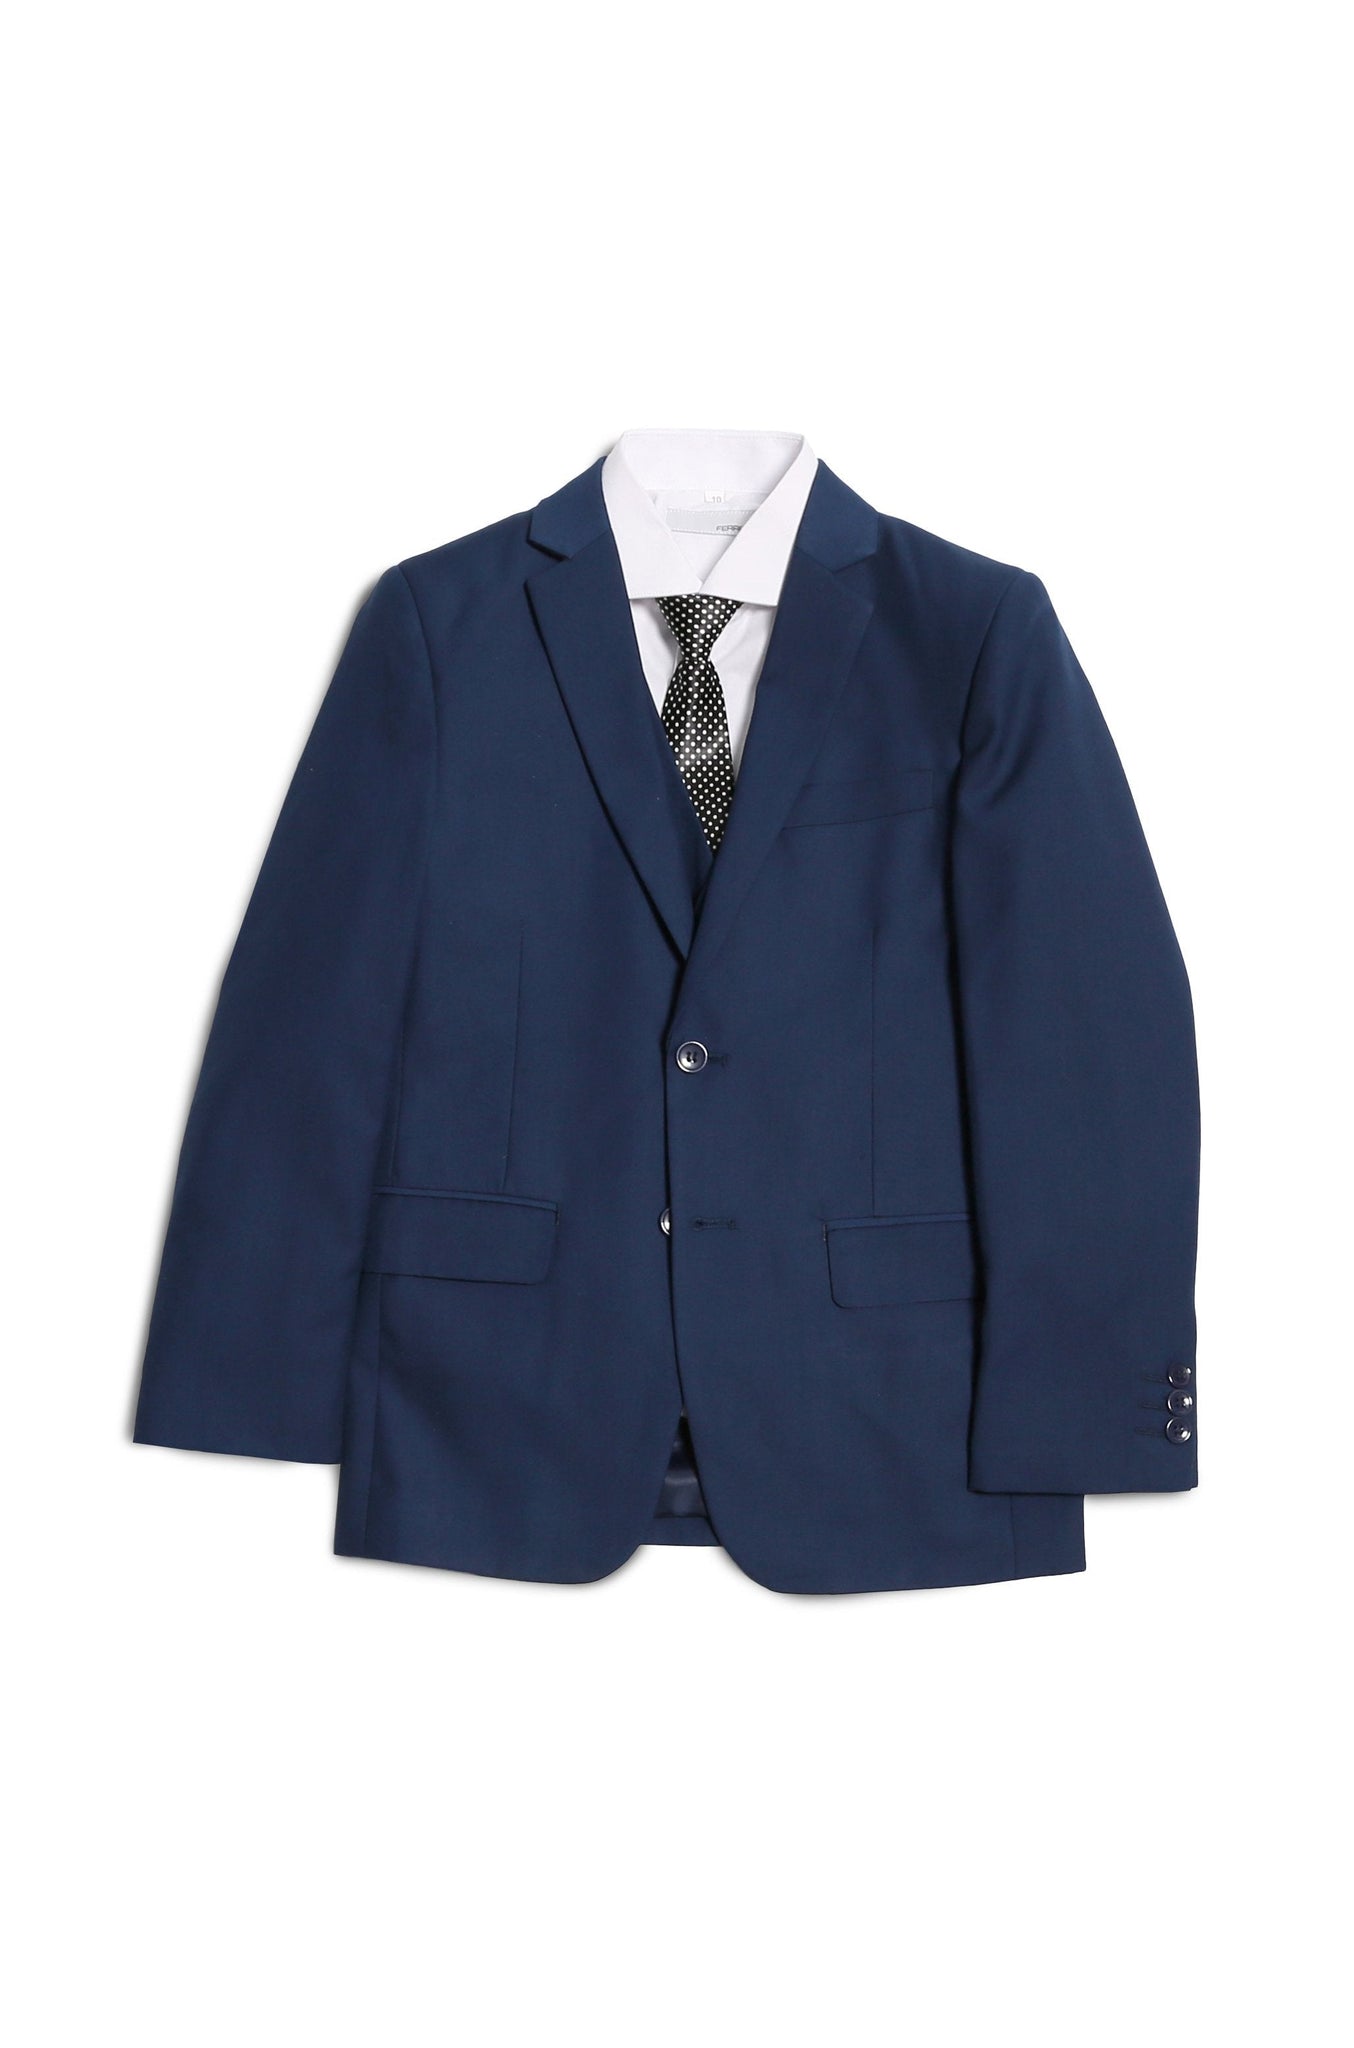 Aggregate more than 188 indigo suit set best